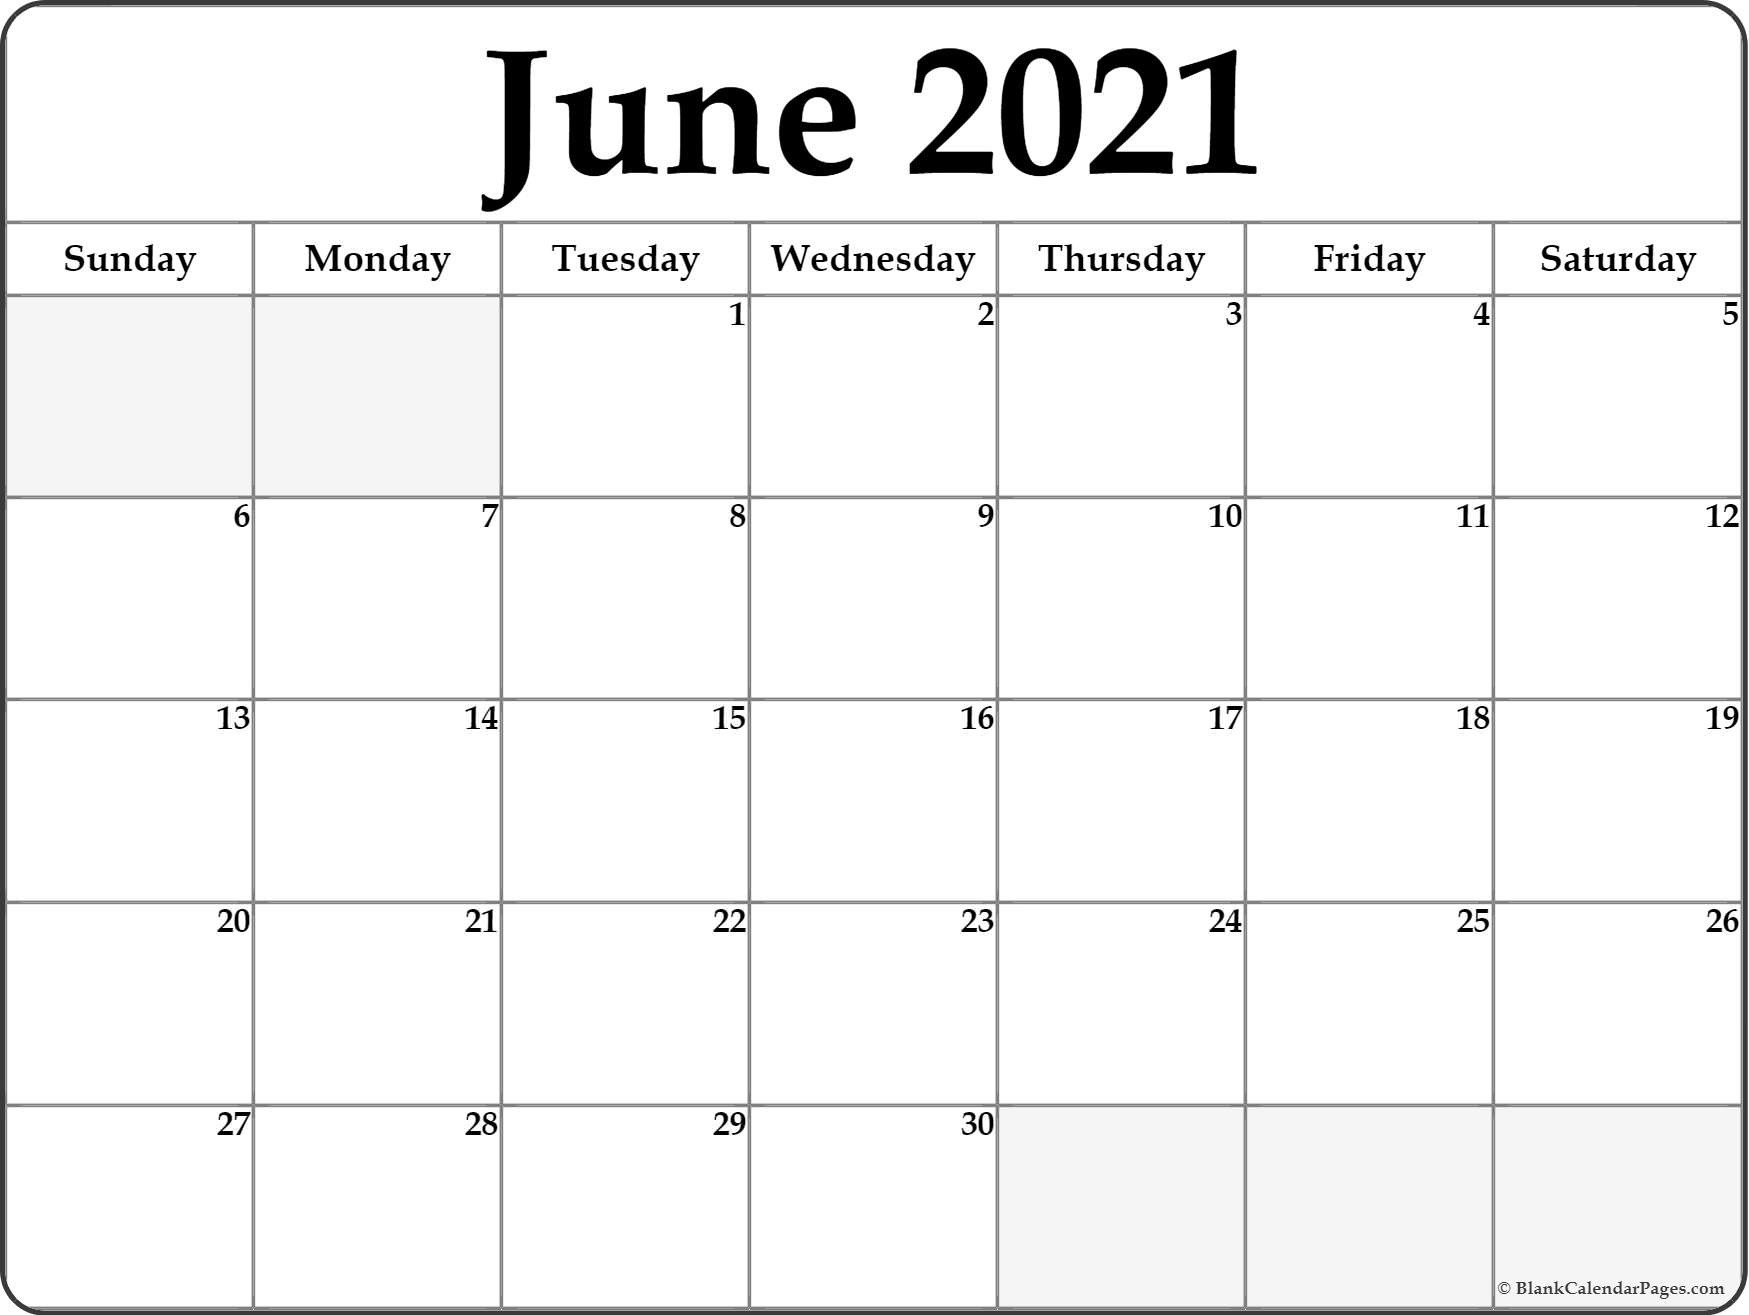 June 2021 Calendar | Free Printable Monthly Calendars-June 2021 Free Calendar